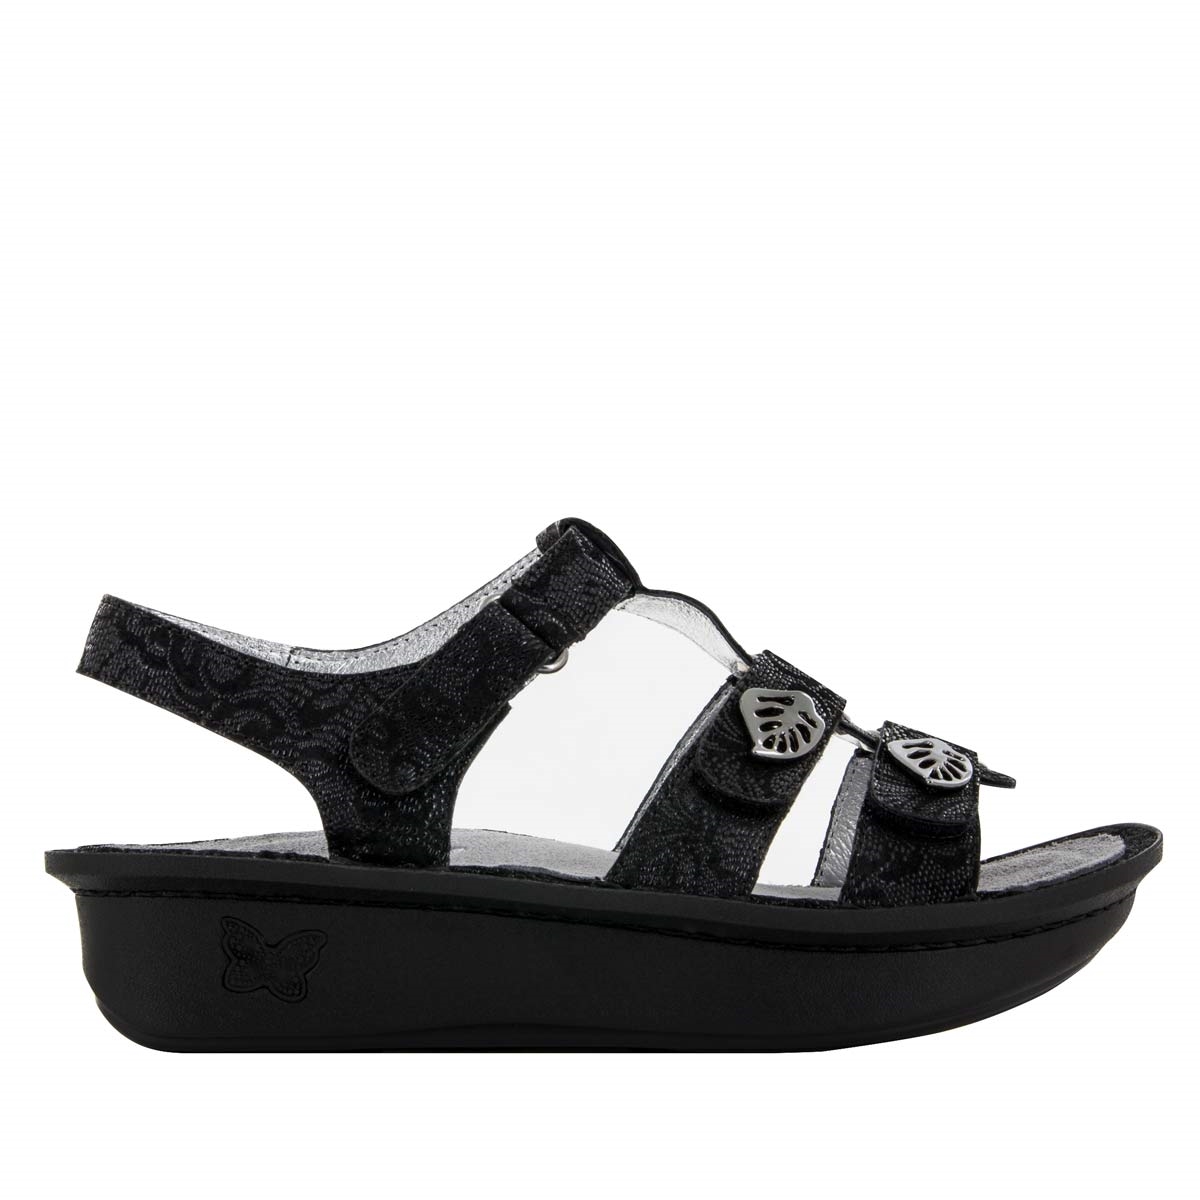 Alegria Kleo Black Leaf sandal | The Original Alegria Shoe Shop